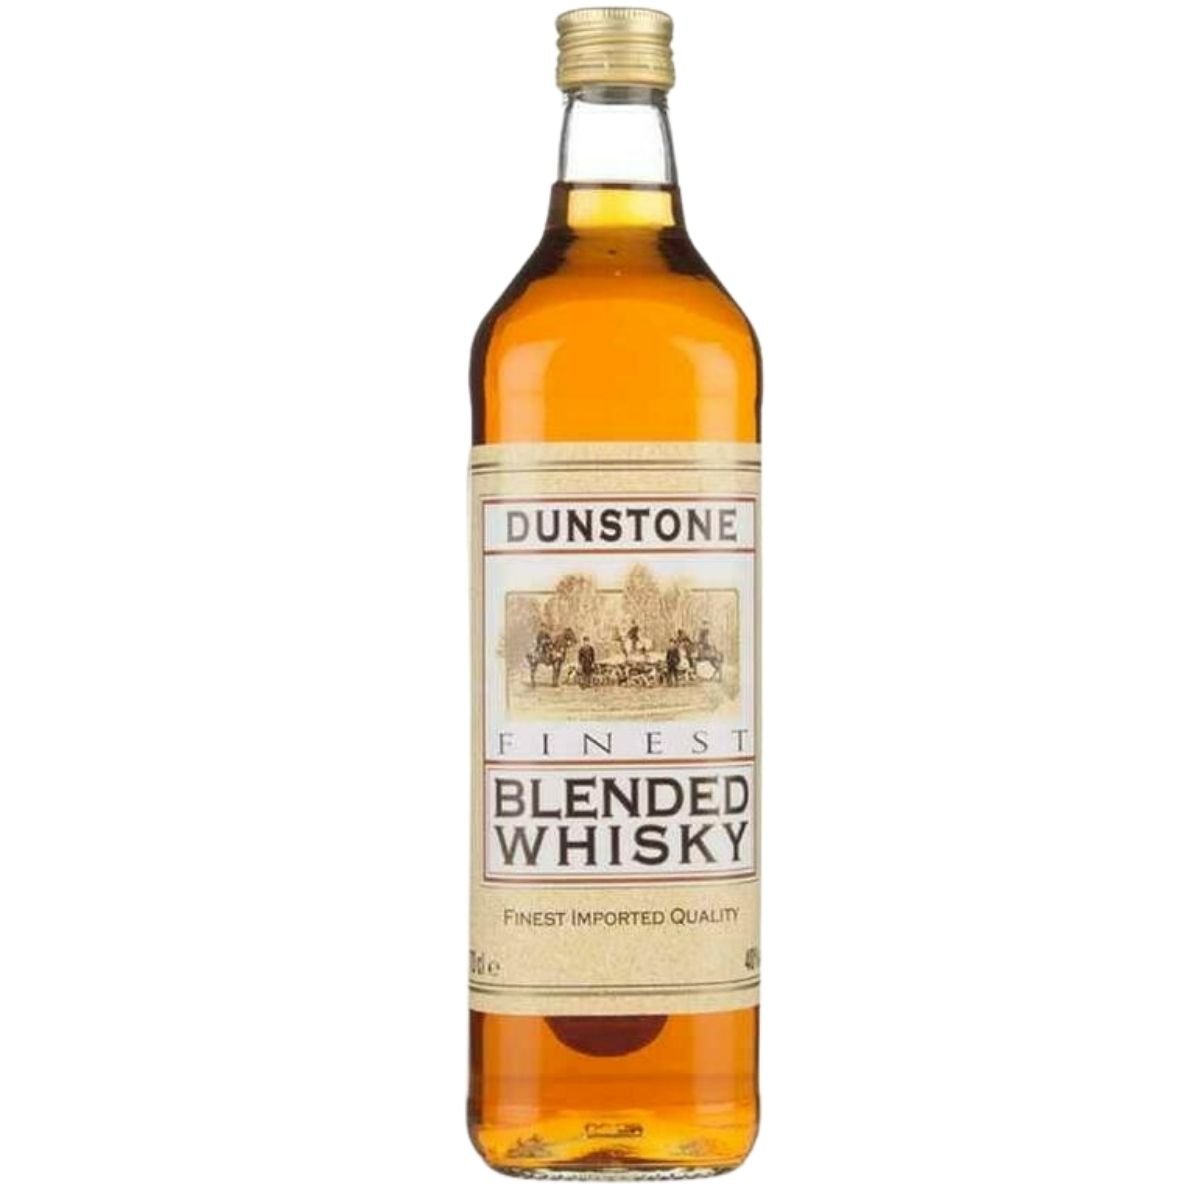 Dunstone Finest Blended Whisky* 1 Ltr